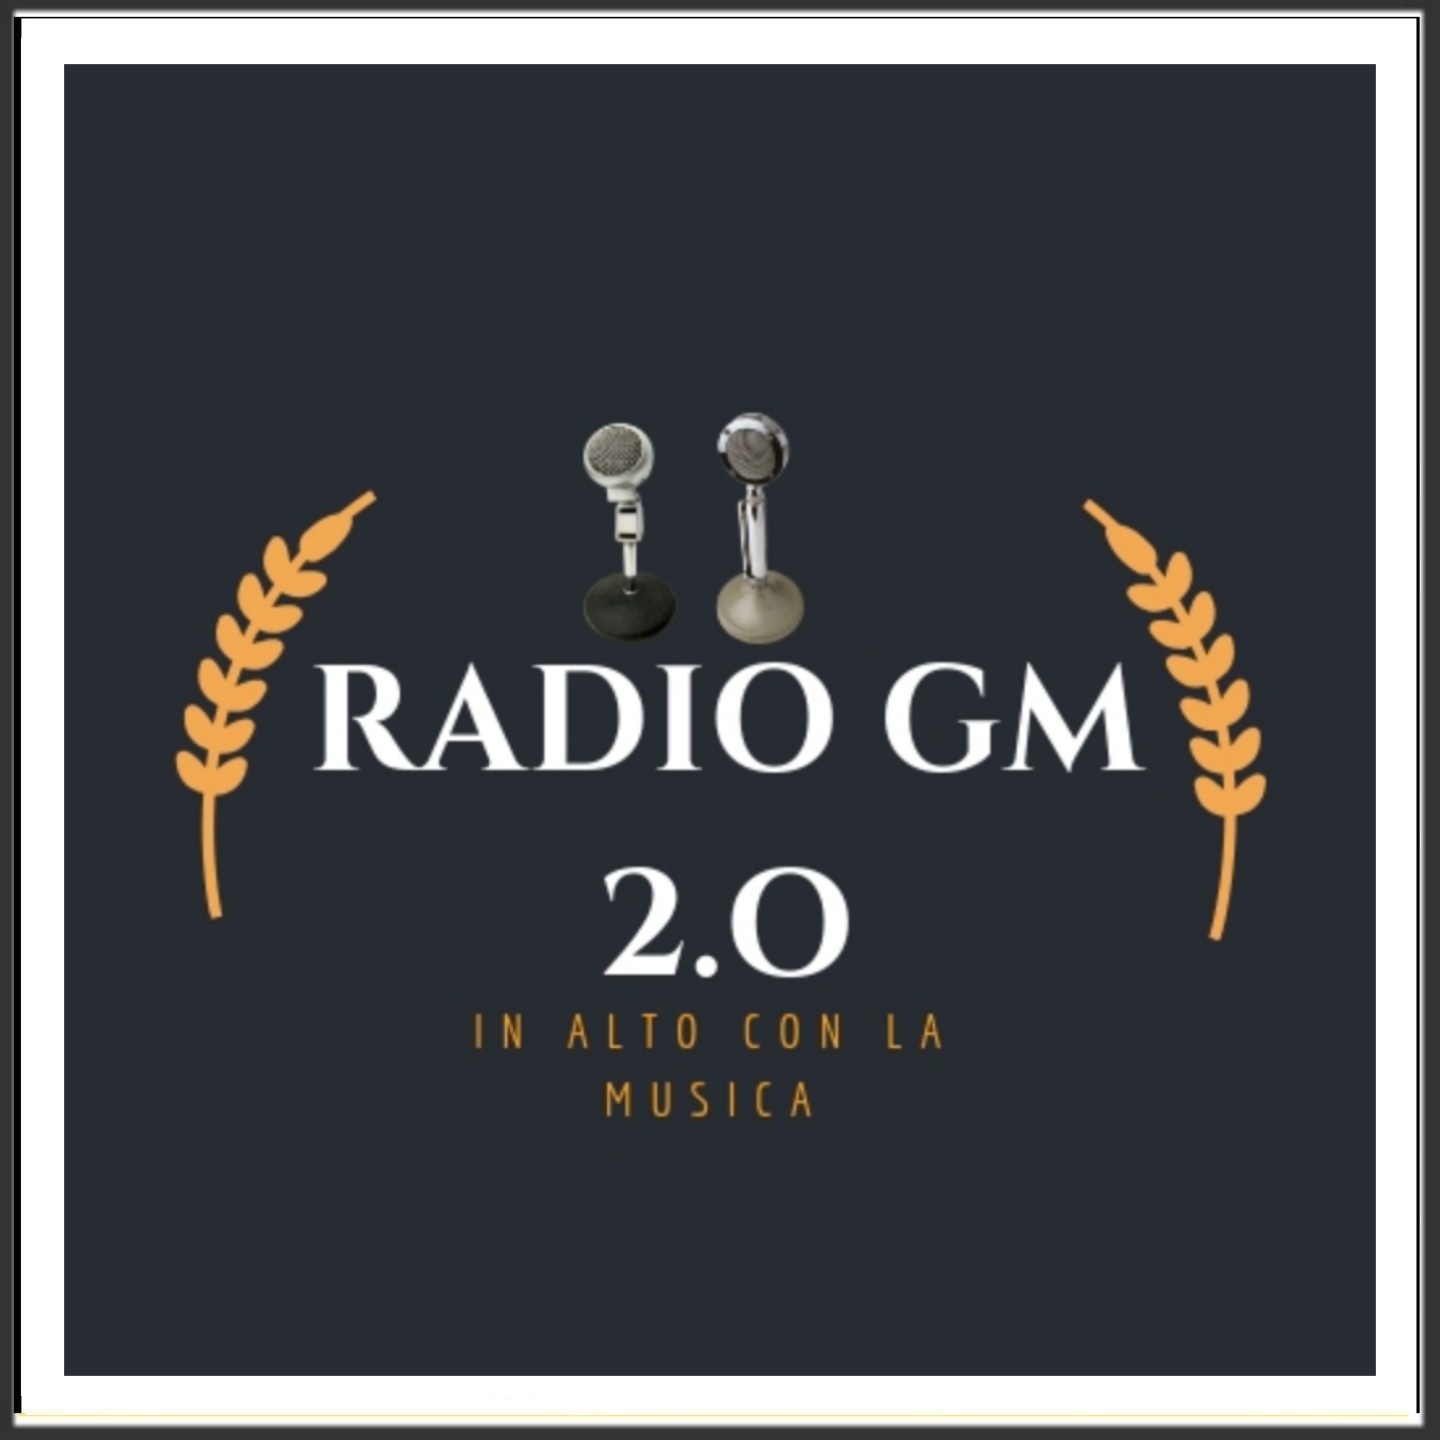 RADIO GM 2.0